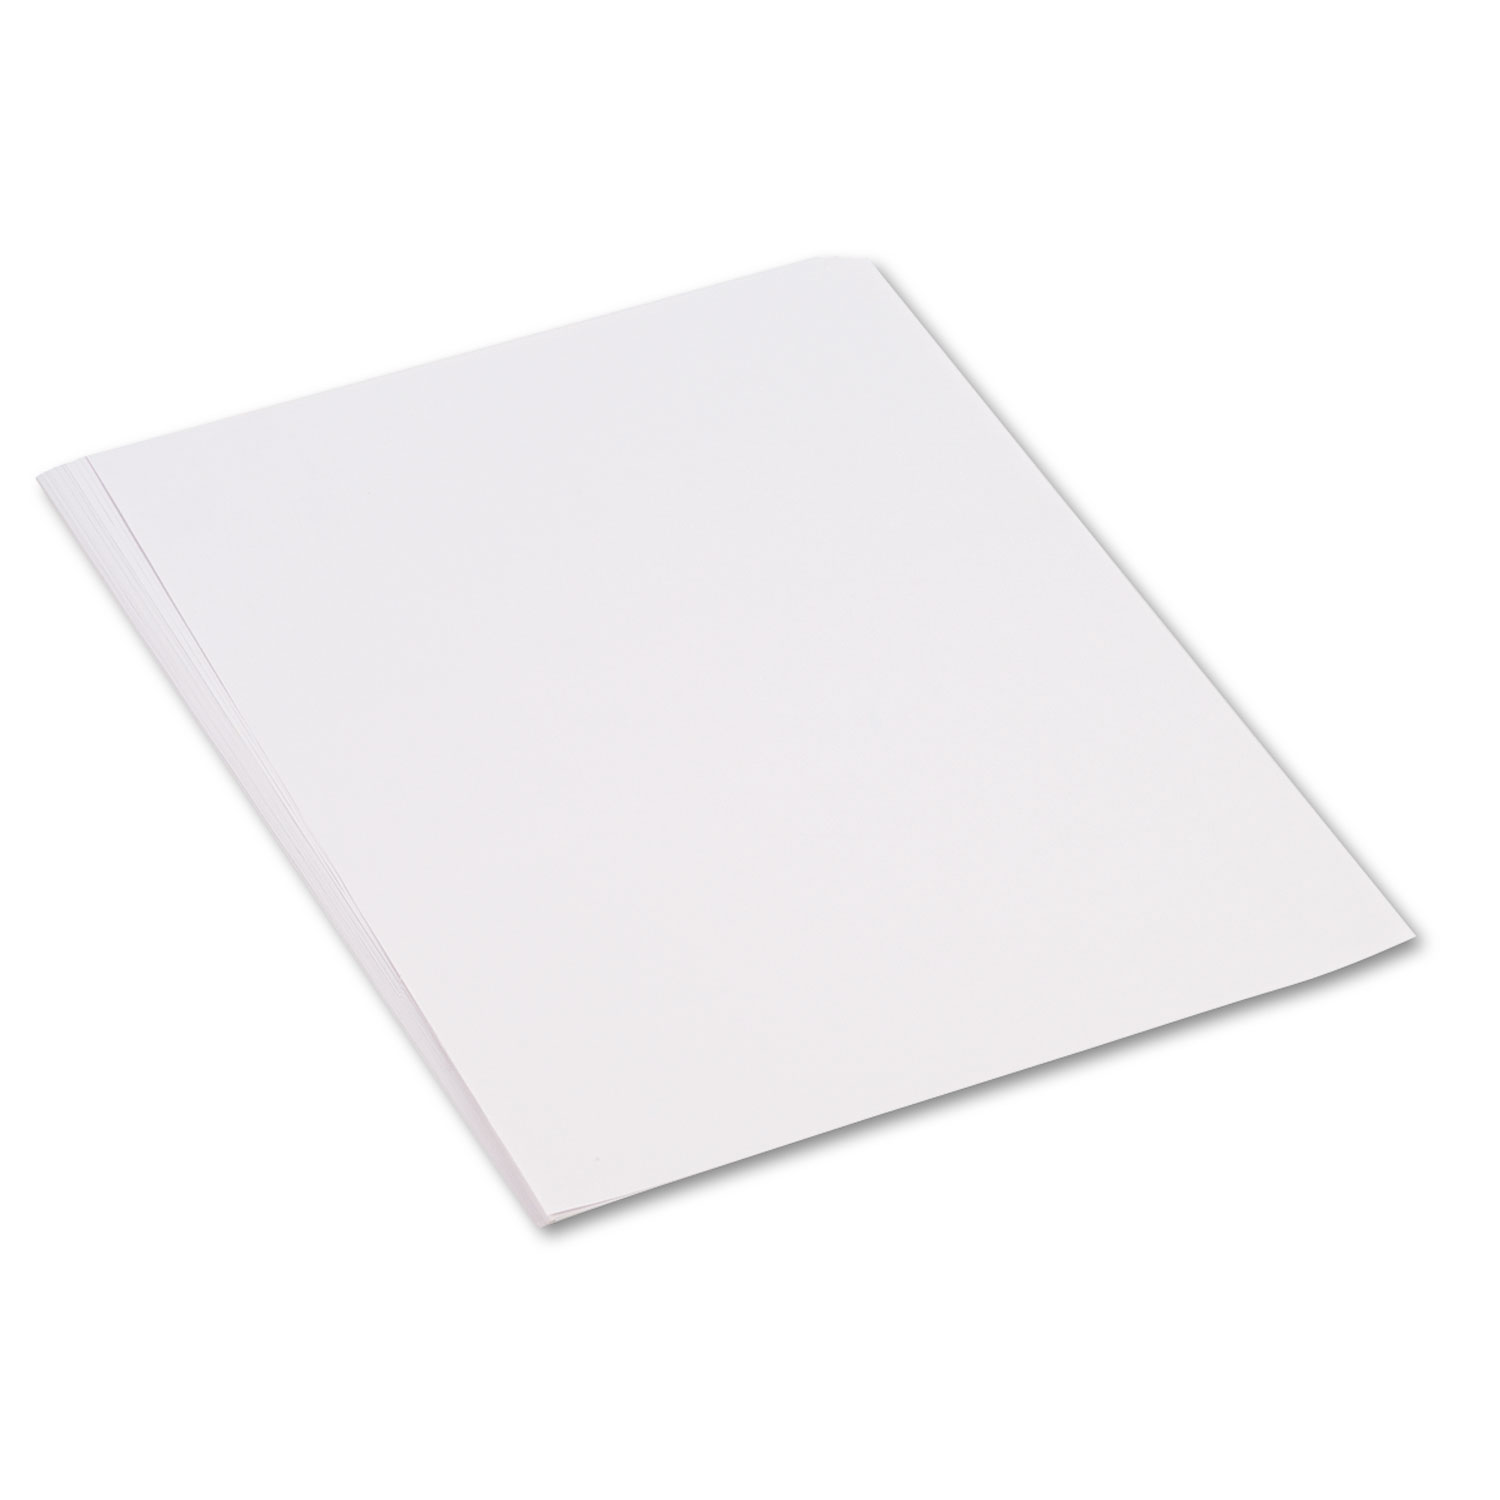  SunWorks 8717 Construction Paper, 58lb, 18 x 24, Bright White, 50/Pack (PAC8717) 